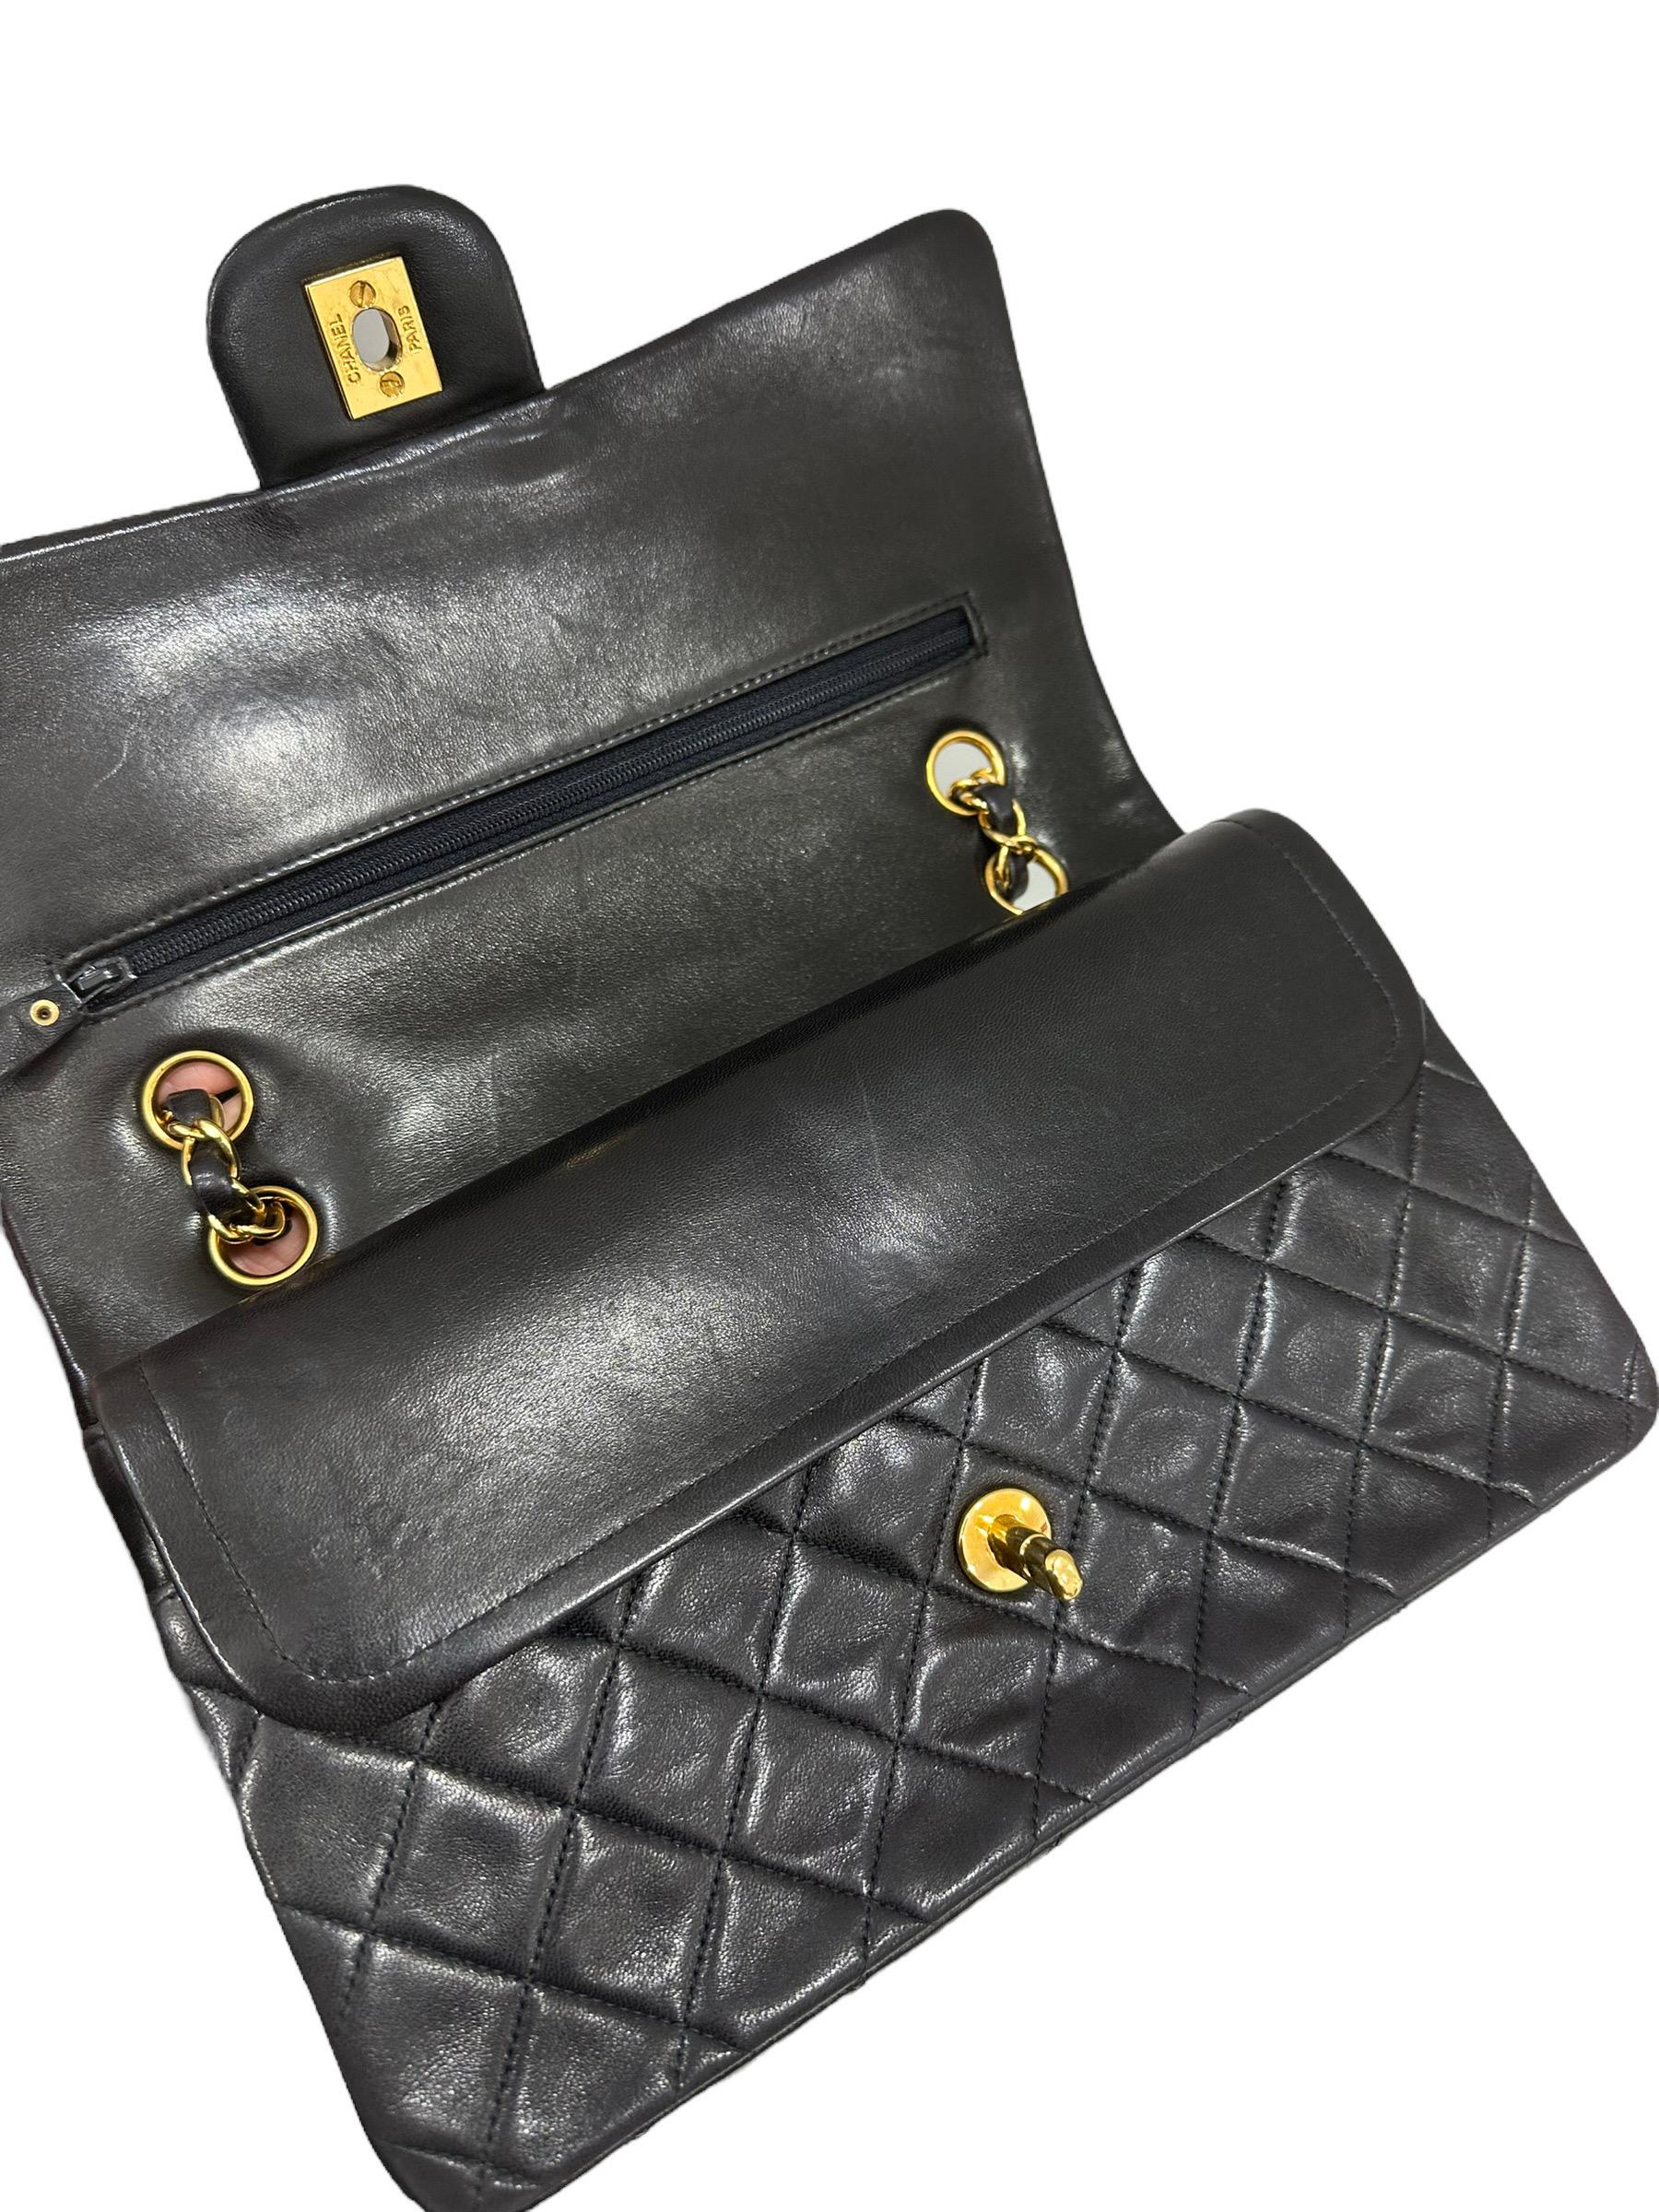 1996 Chanel Timeless Classic 2.55 Black Leather Top Shoulder Bag For Sale 12